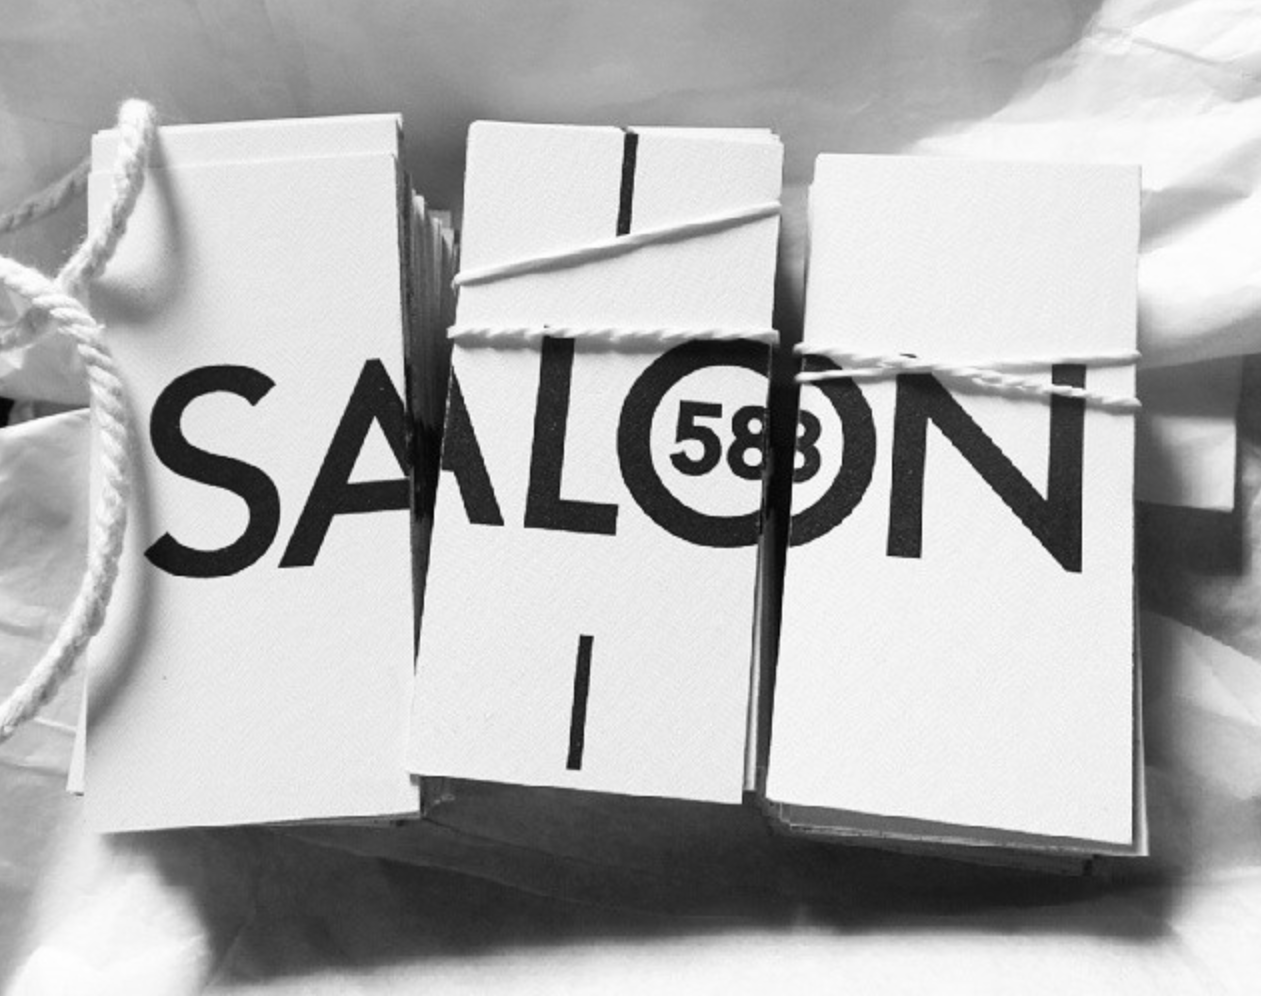 SALON 58 OPENS UP TO MEN